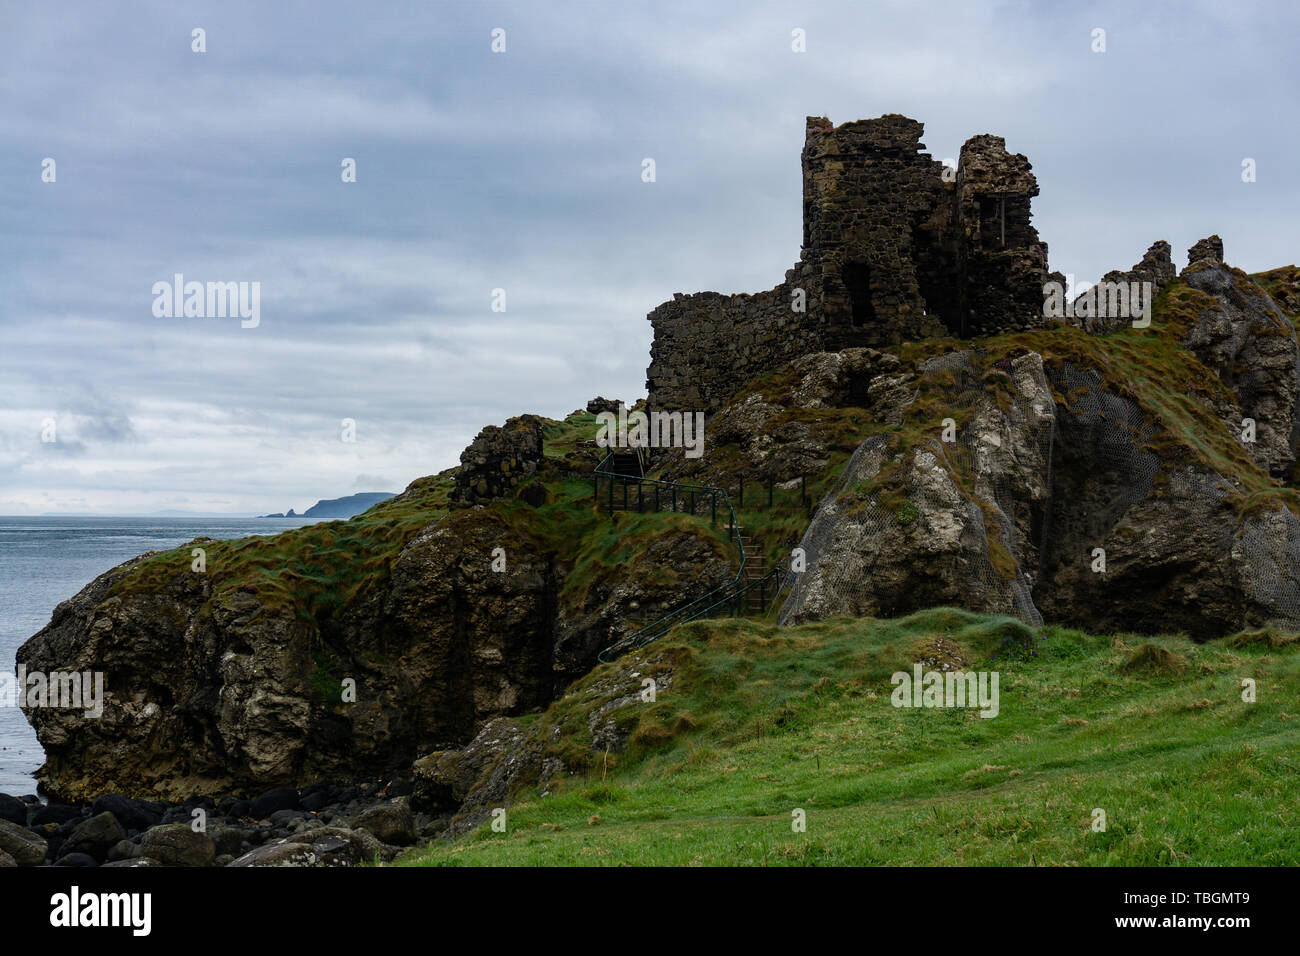 Northern Ireland, Kinbane Headland, May 2019: Ruins of the castle Kinbane on the Kinbane head Stock Photo